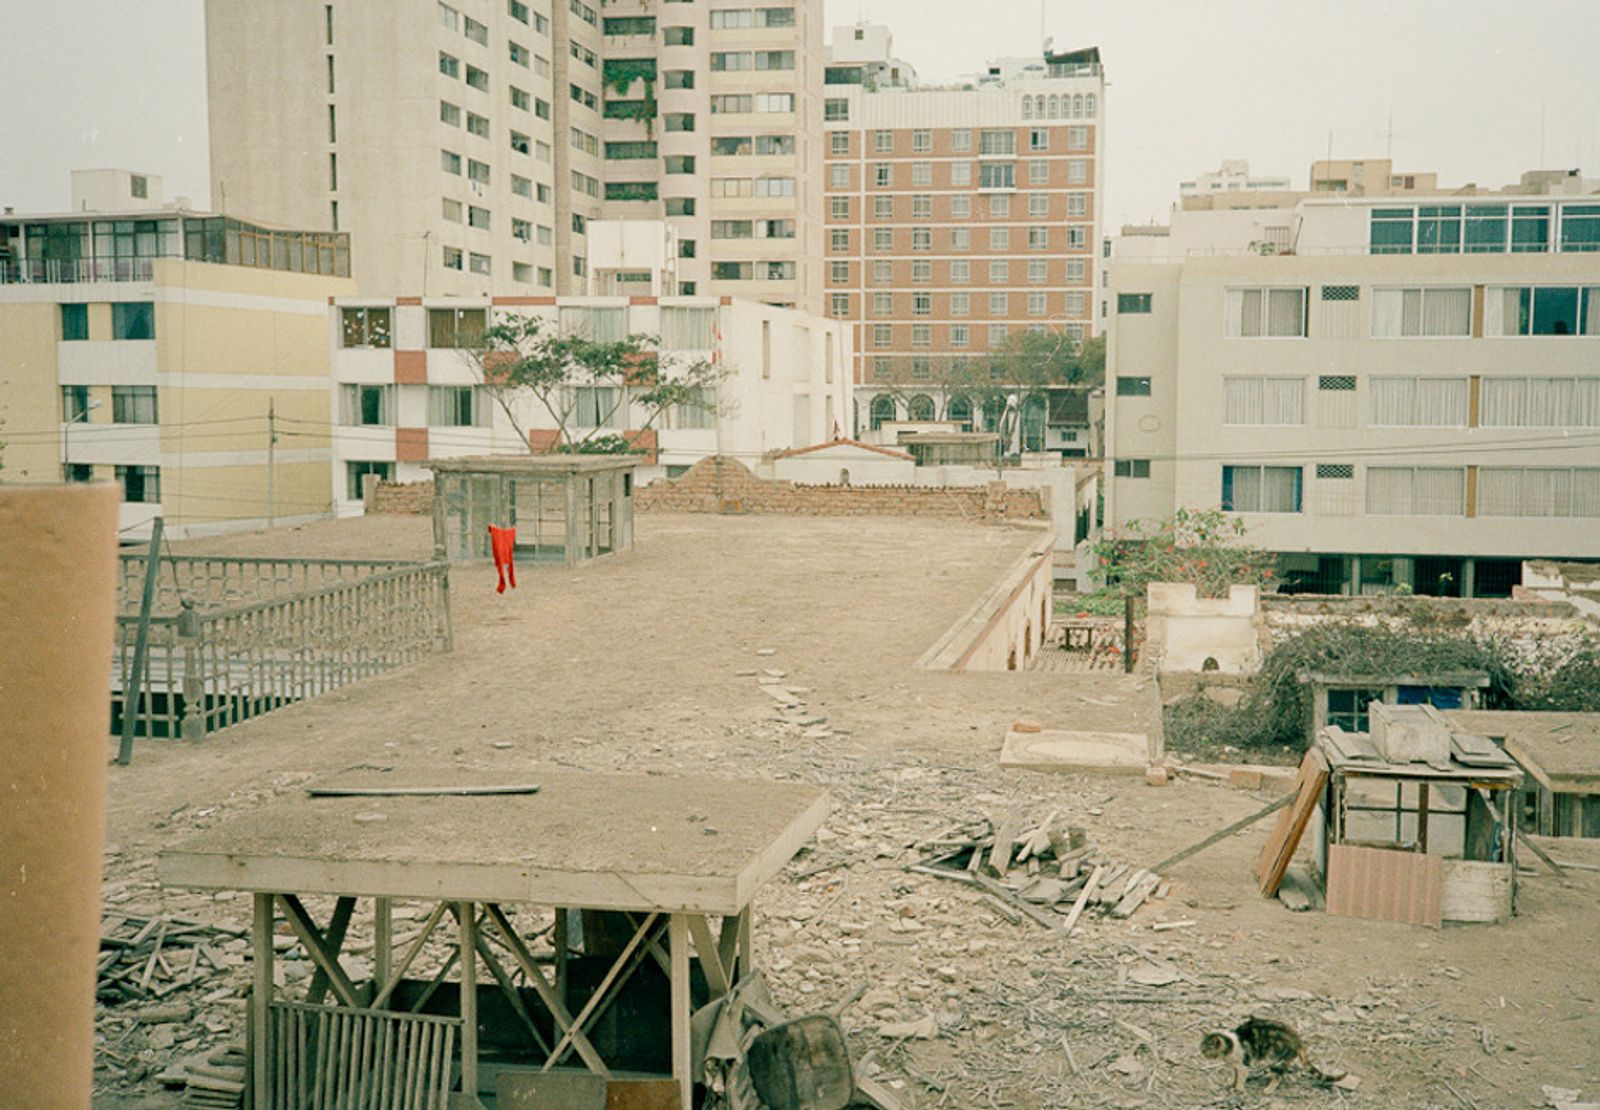 © Daniel Piaggio Strandlund - Image from the ‘apagón’ (balckout Peru 1984-1994) photography project